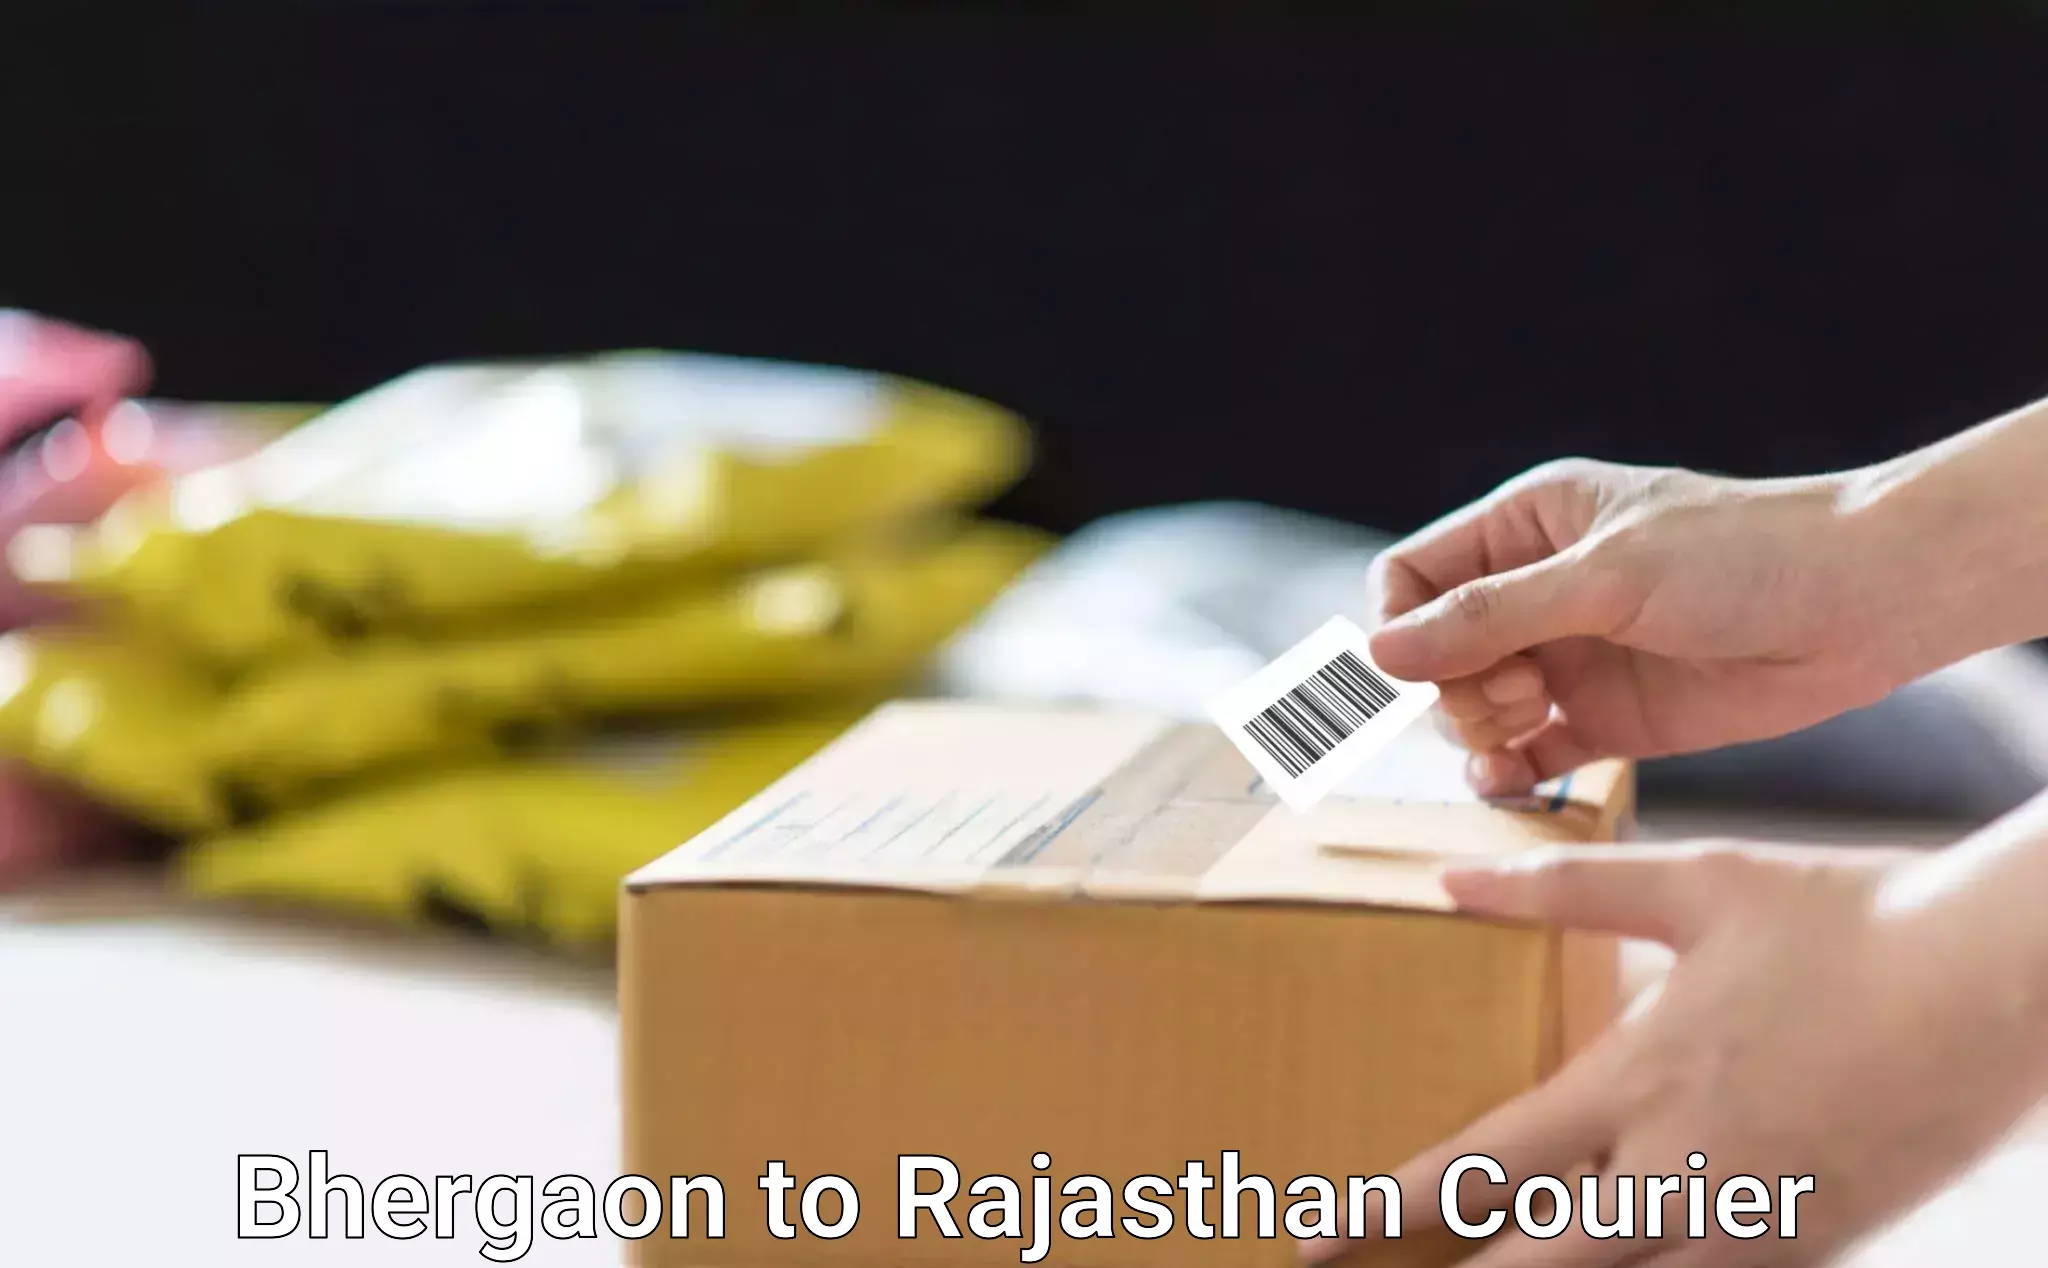 Global delivery options Bhergaon to Pratapgarh Rajasthan